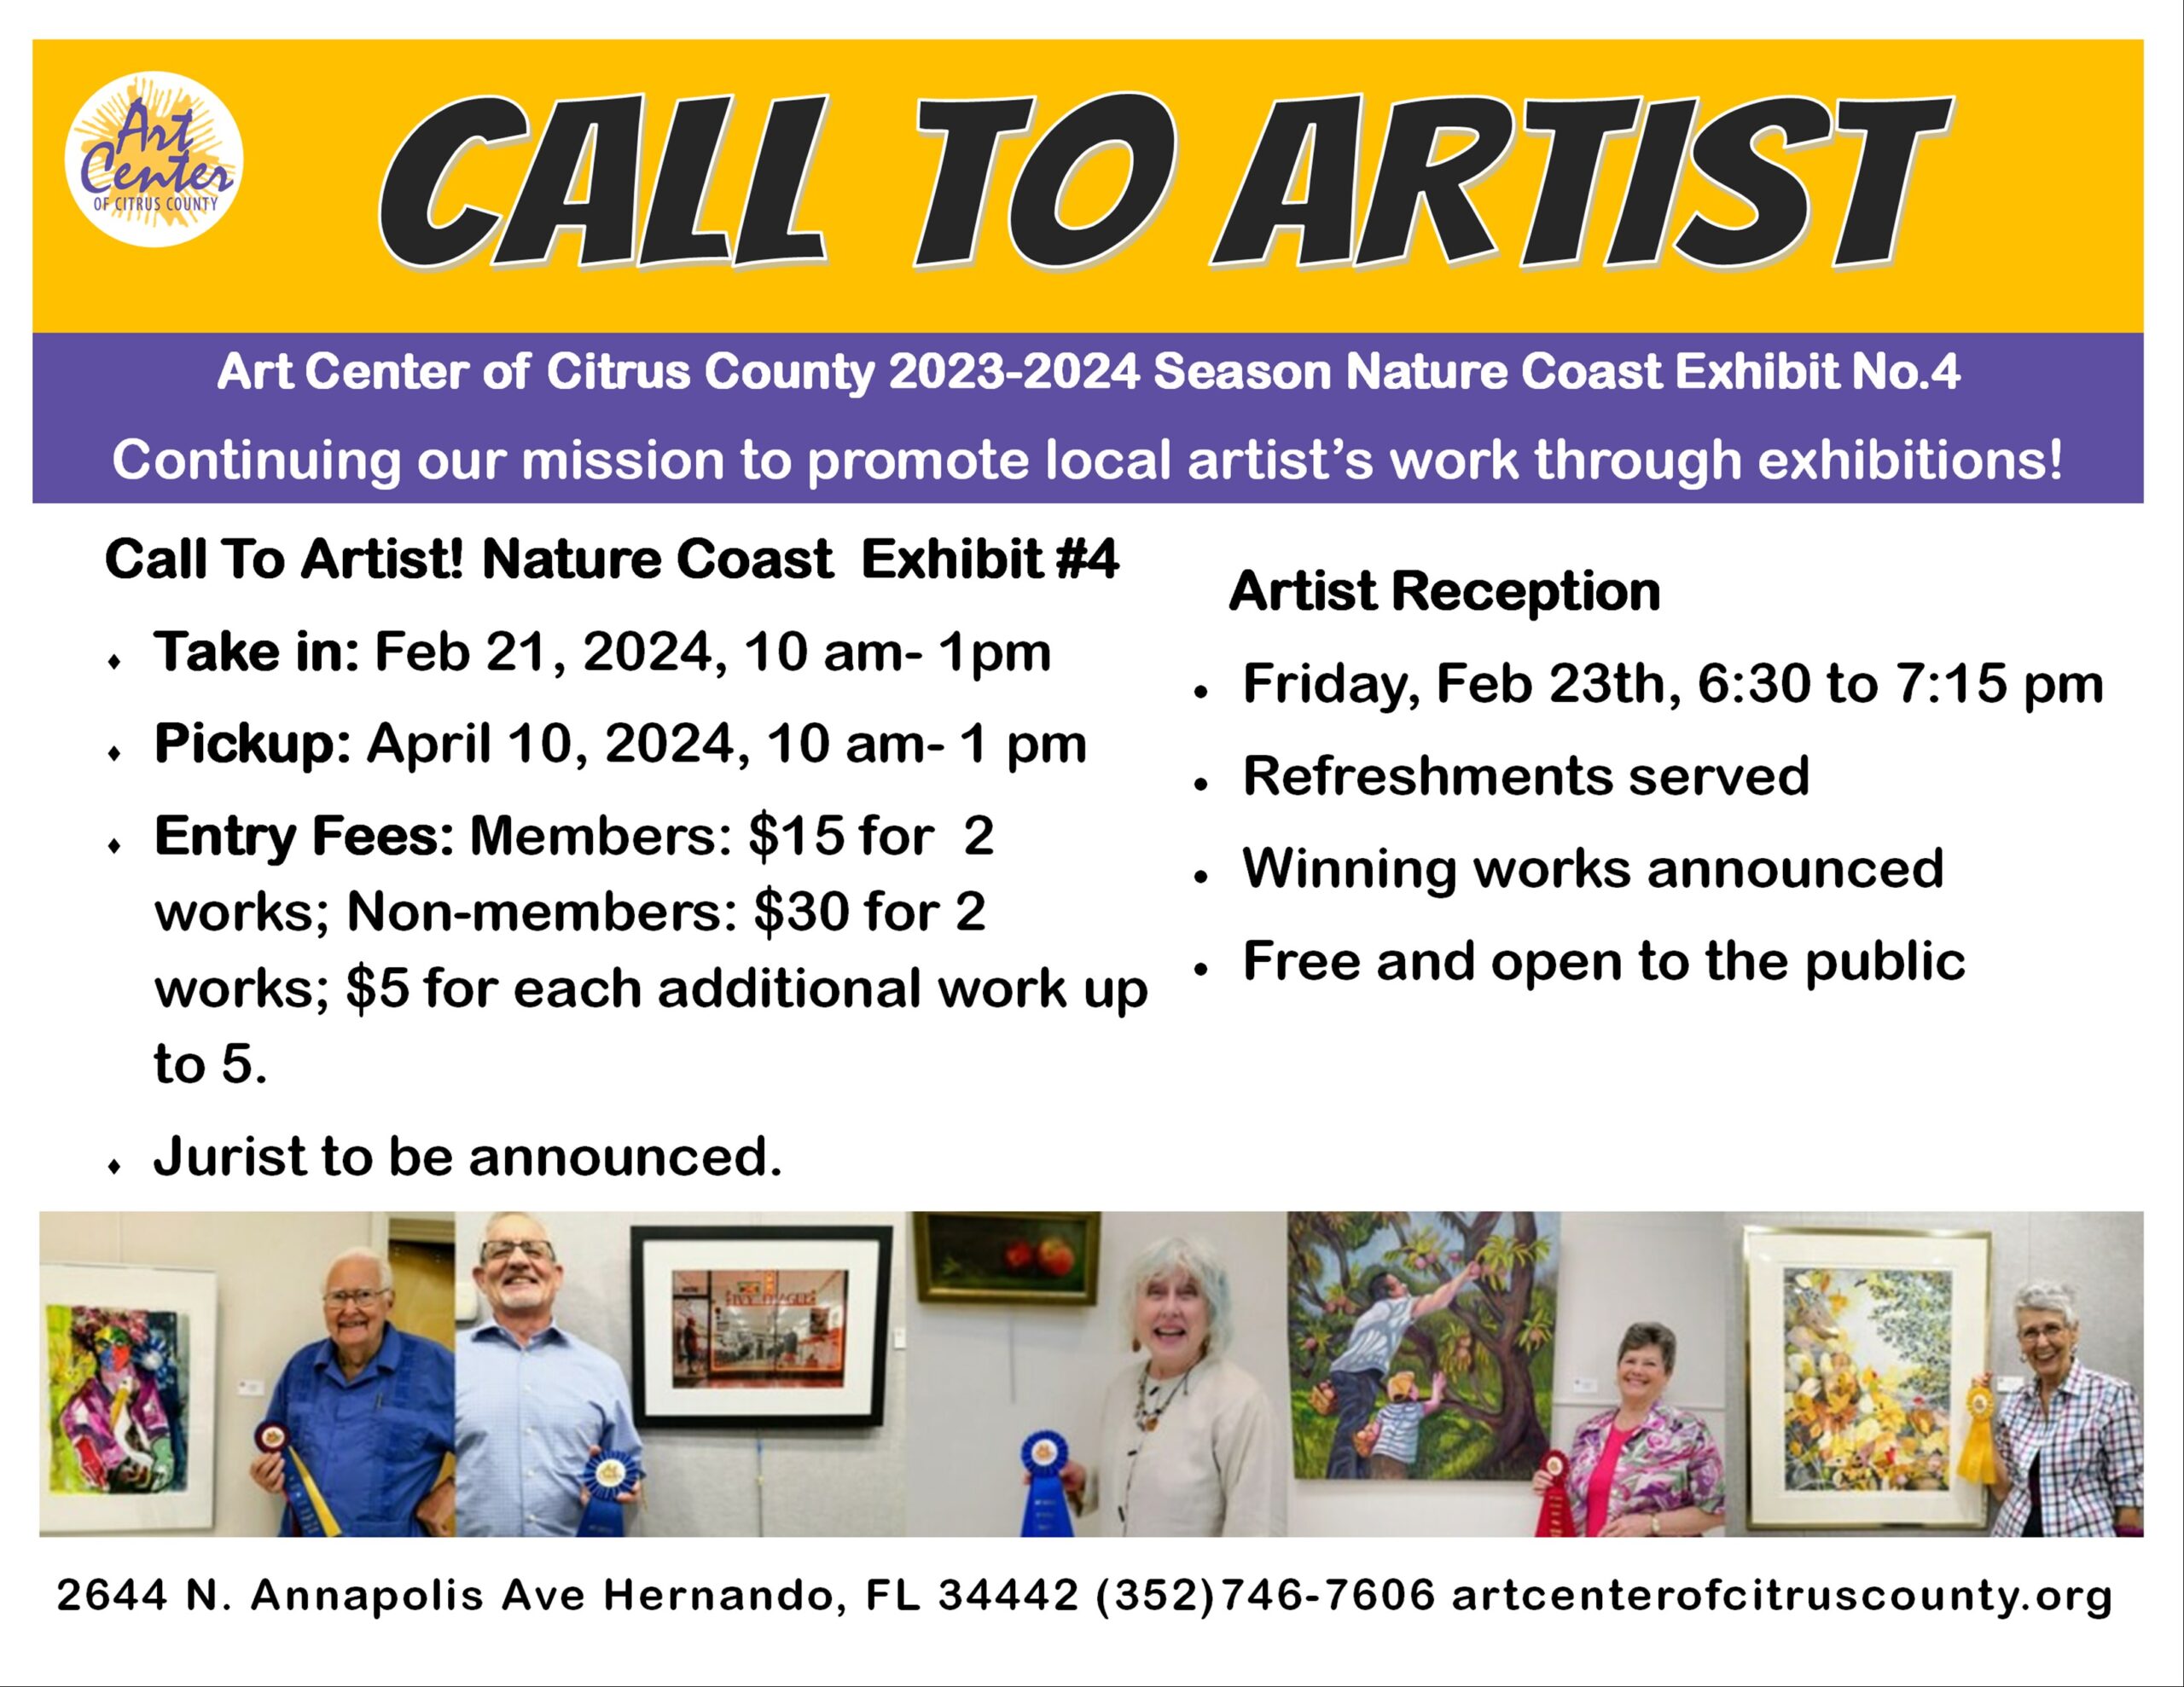 Call to Artist Nature Coast Exhibit No.4 Wednesday, Feb. 21, 10 am-1pm